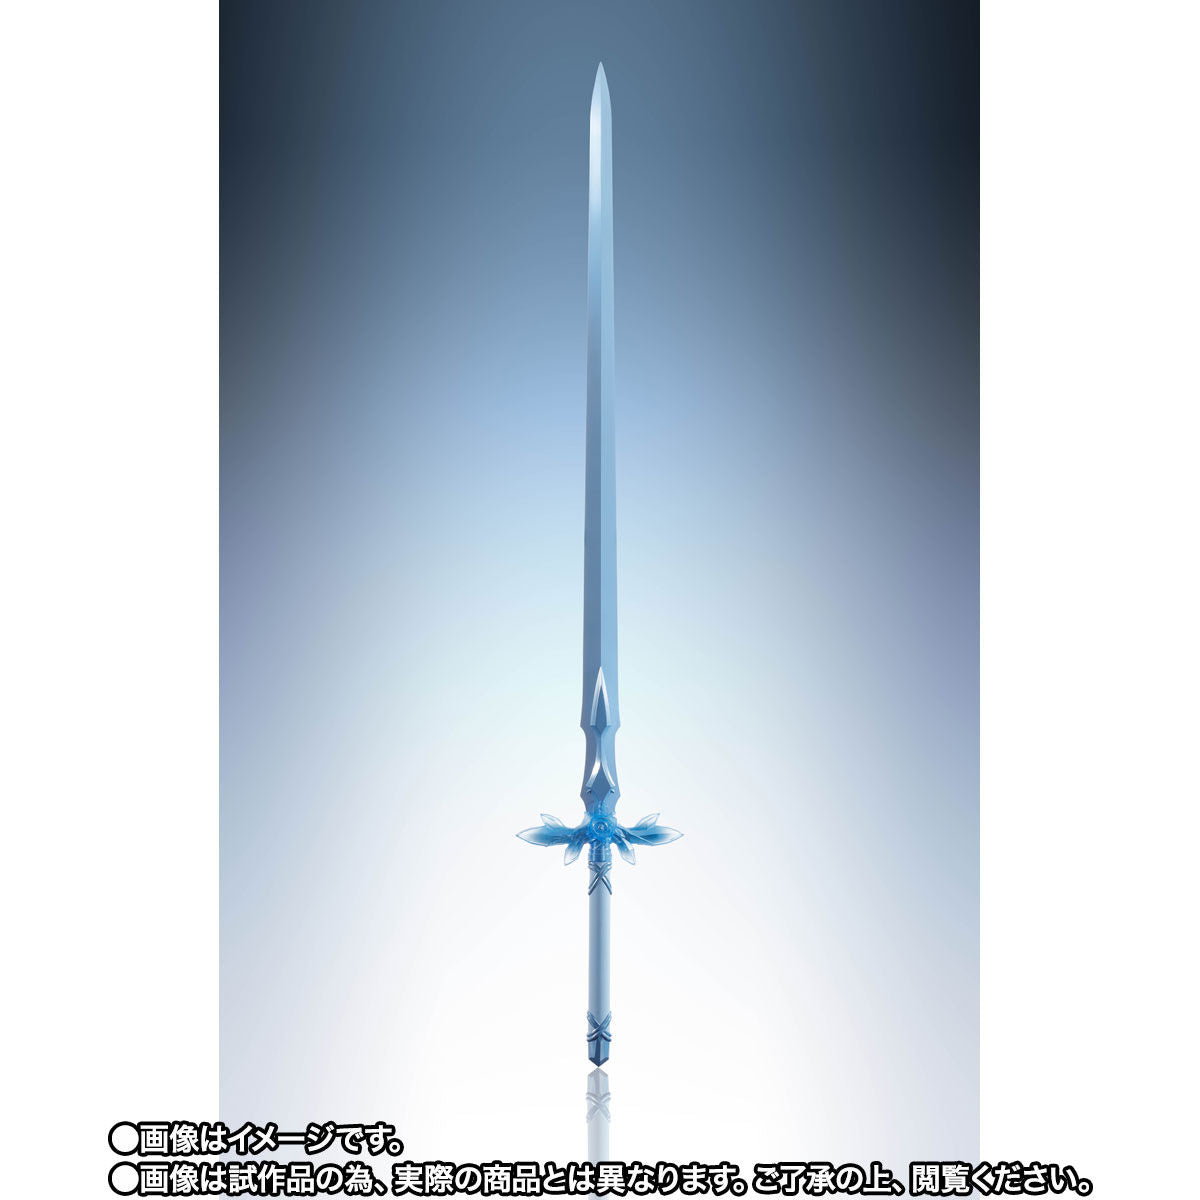 Sword Art Online Proplica Blue Rose Sword